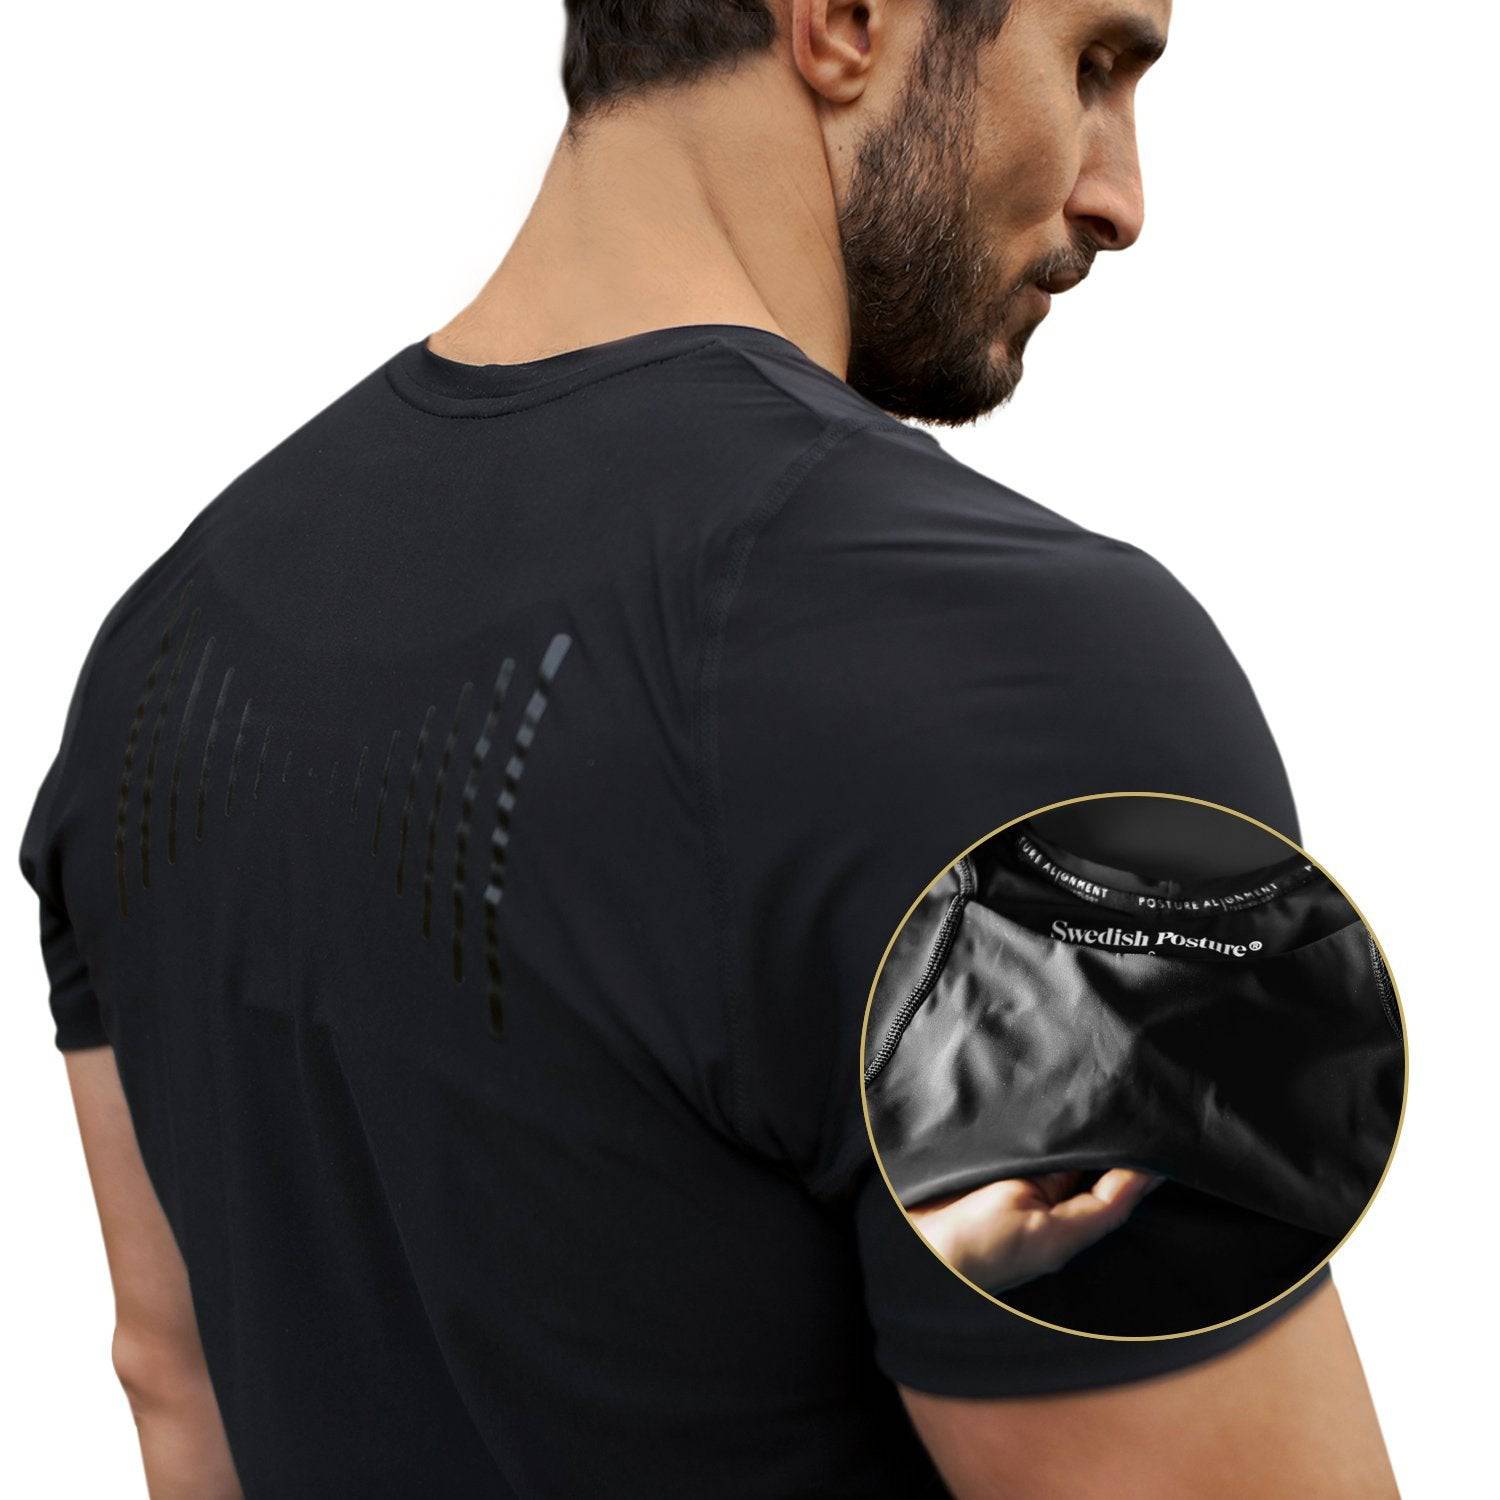 Swedish Posture Posture Reminder T-Shirt - Black Medium - Men's ActiveLifeUSA.com